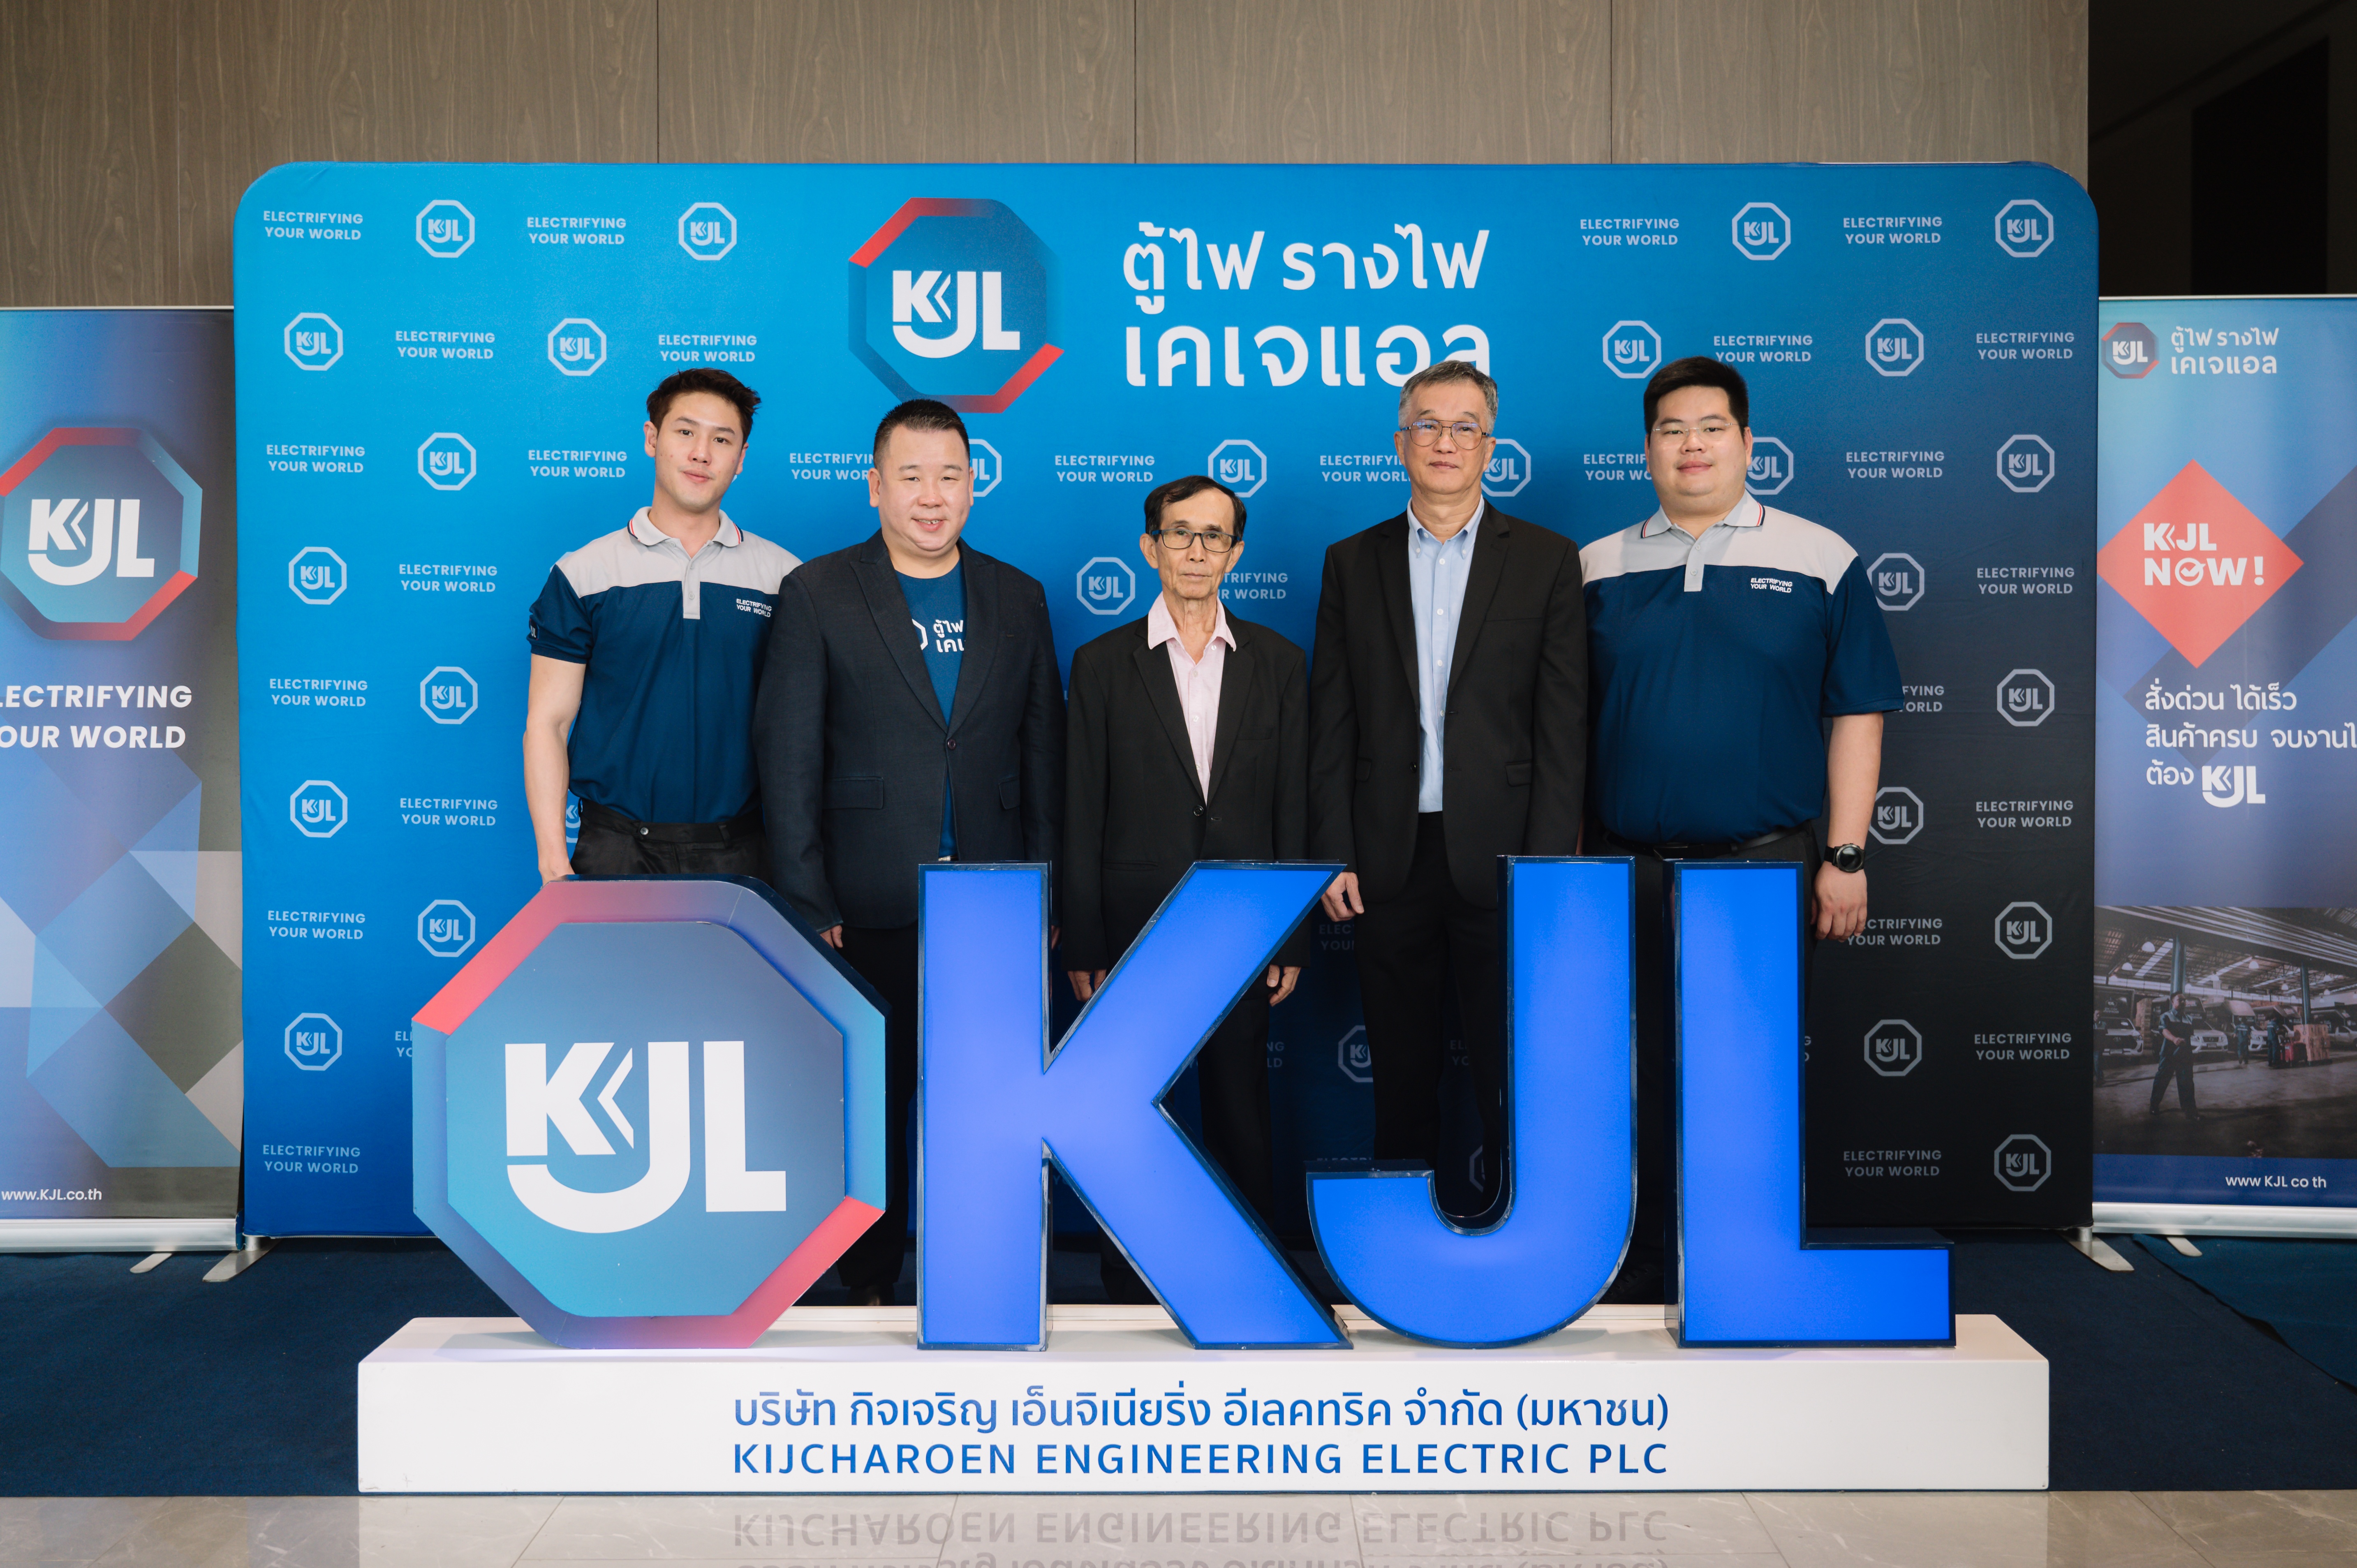 KJL โรดโชว์ “จัดสัมมนารวมพลคนไฟฟ้า” ON TOUR จ.ชลบุรี เพิ่มศักยภาพ สร้าง Network Effect ยกระดับความปลอดภัย